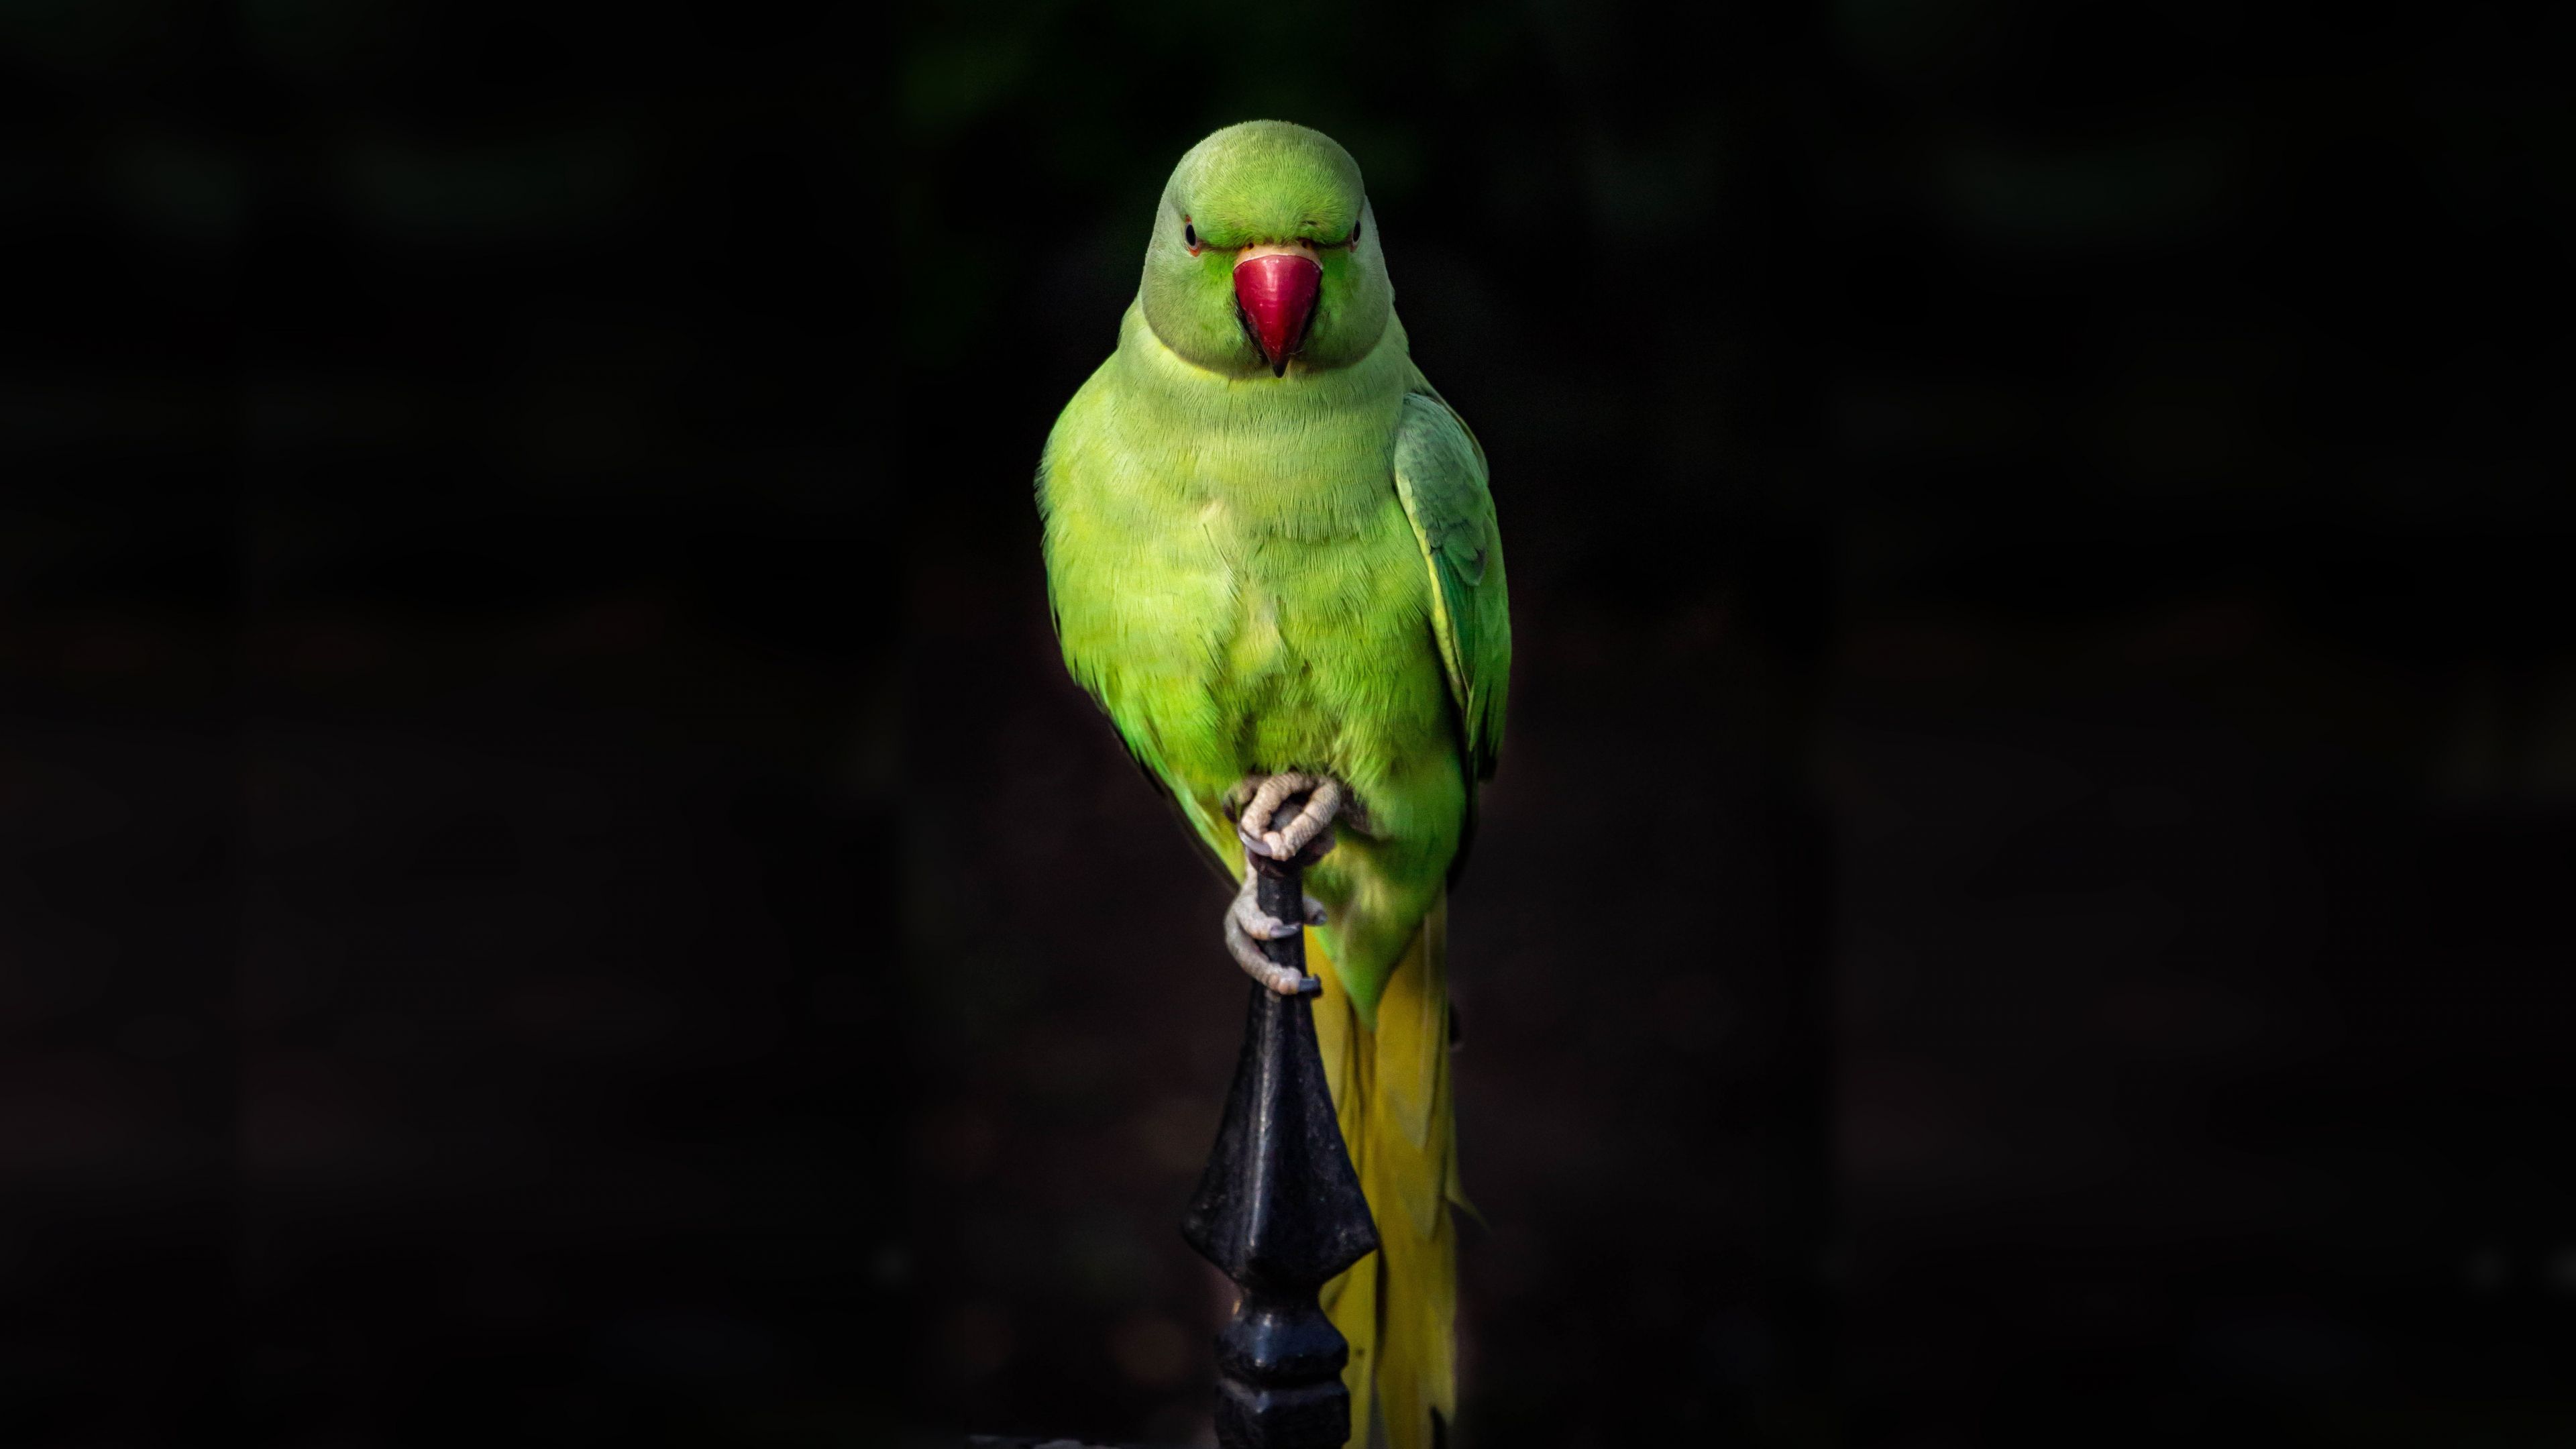 Download 3840x2160 wallpaper parrot, green, bird, sit, portrait, 4k, uhd 16: widescreen, 3840x2160 HD image, background, 8309